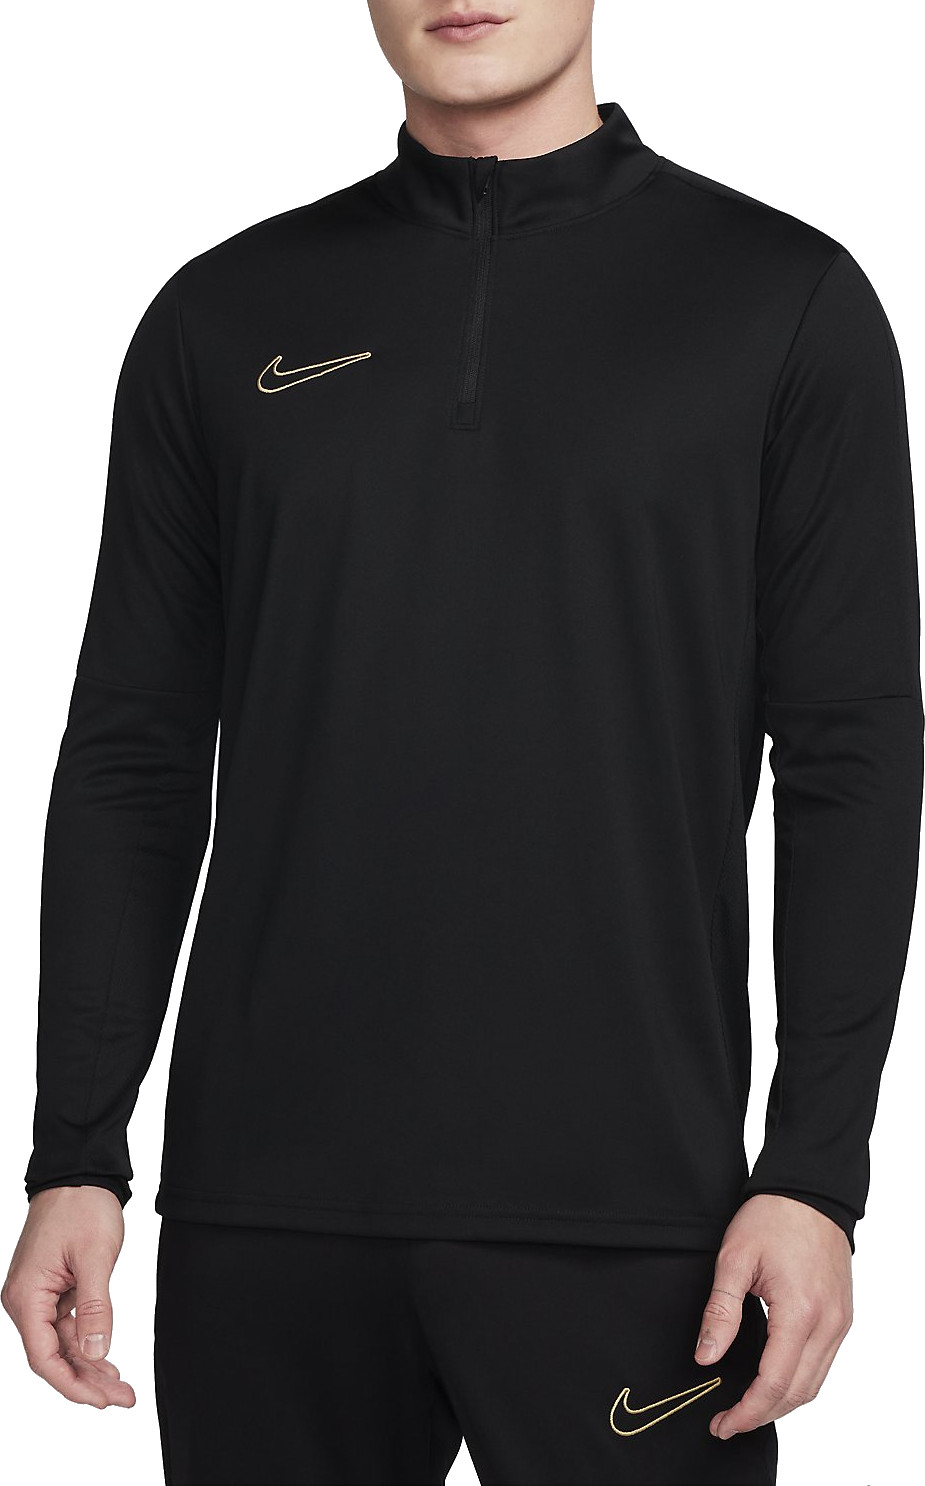 Pánské fotbalové tréninkové tričko s dlouhým rukávem Nike Dri-FIT Academy